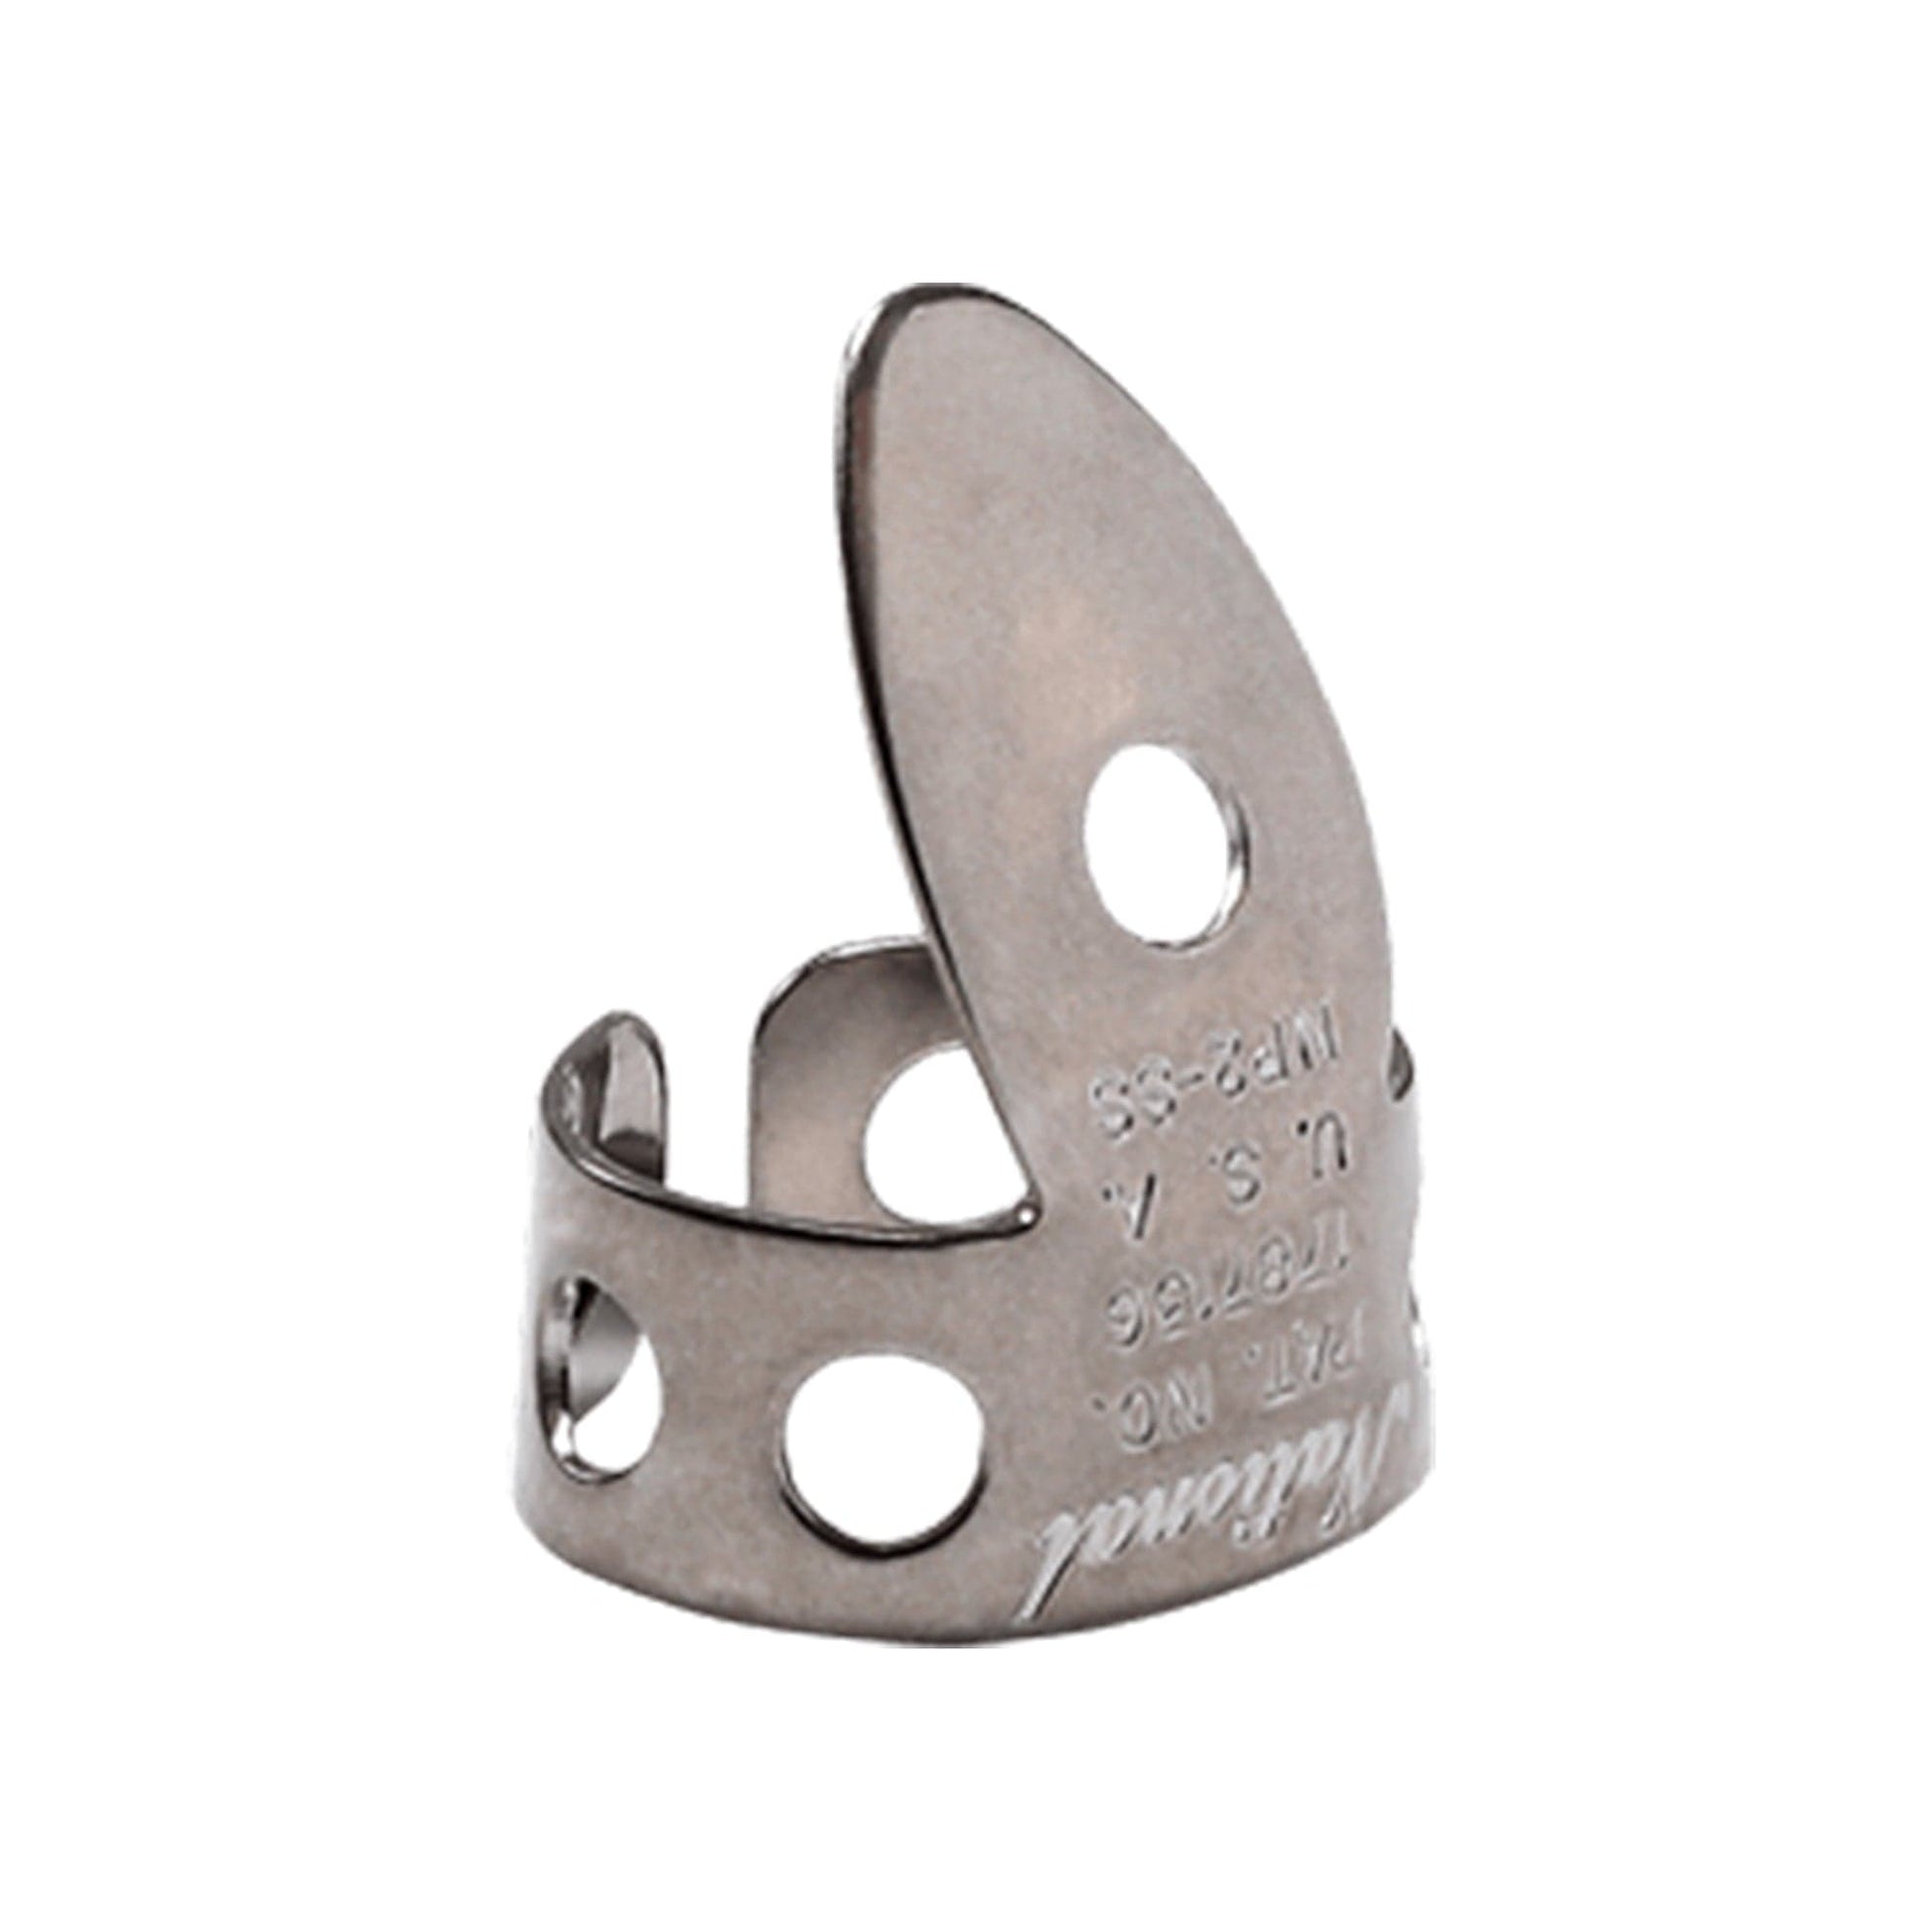 National Finger Picks Stainless Steel 2 Pack (8) Bundle Accessories / Picks